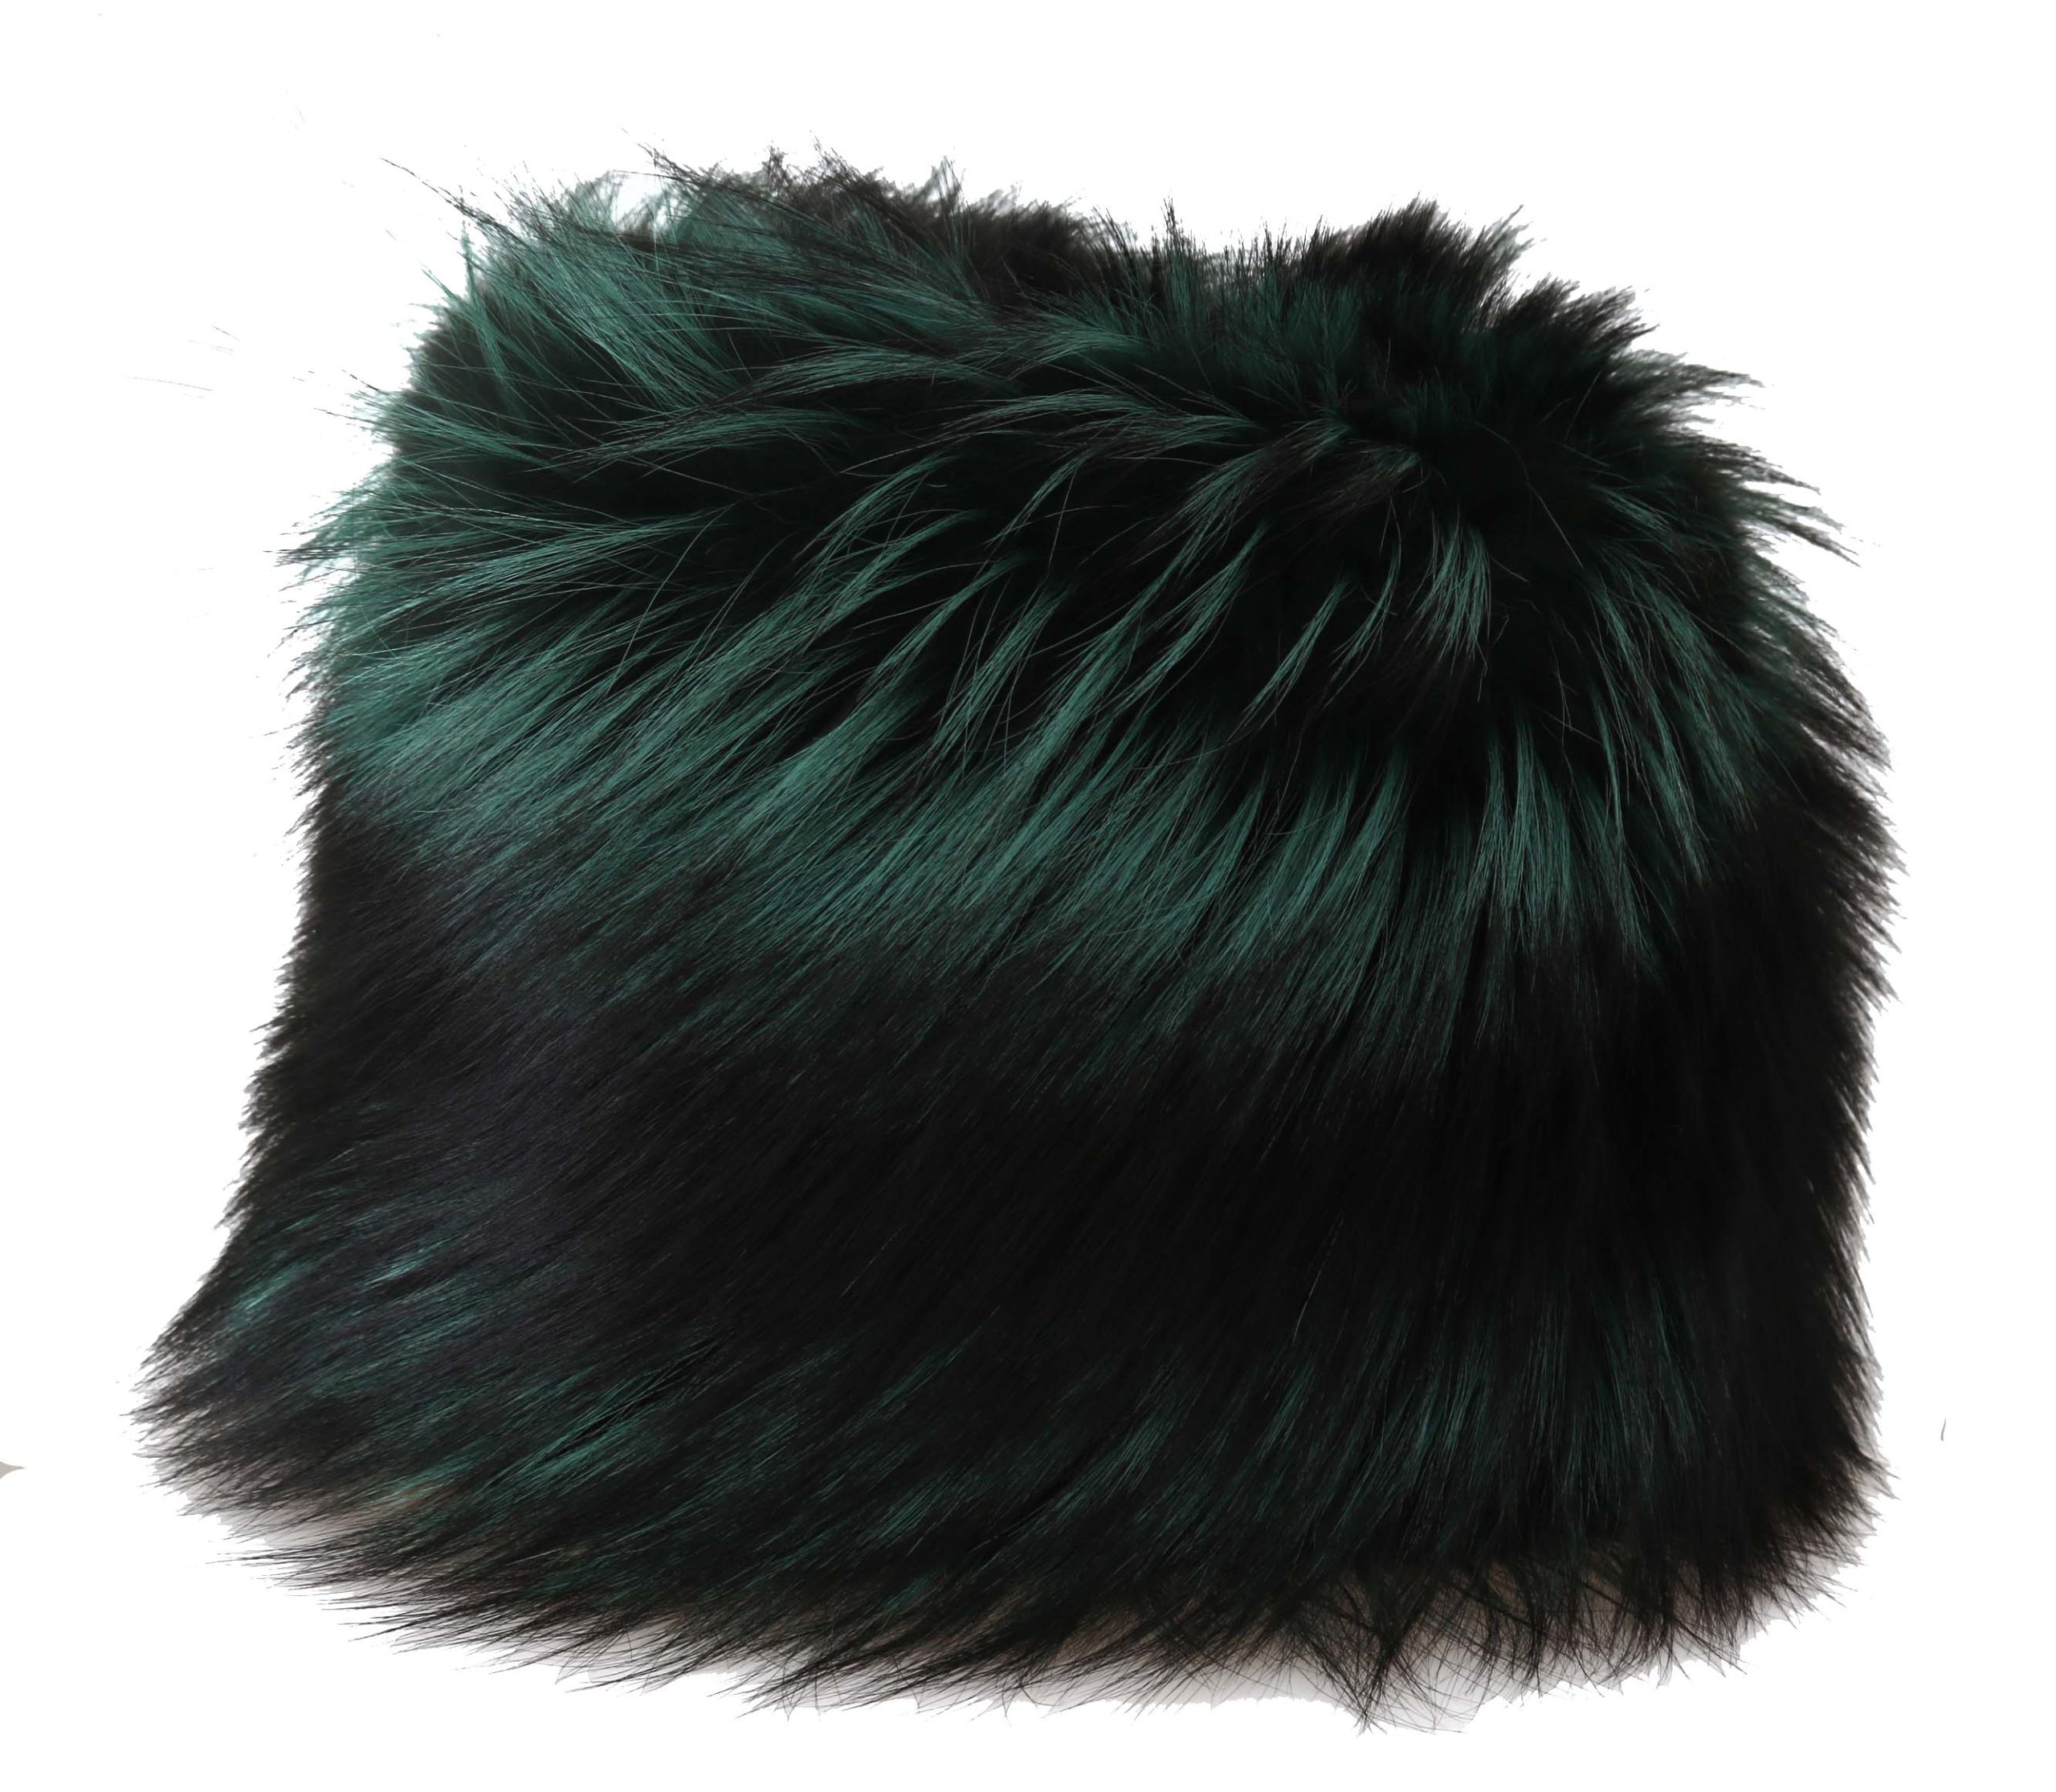 cossack winter hat